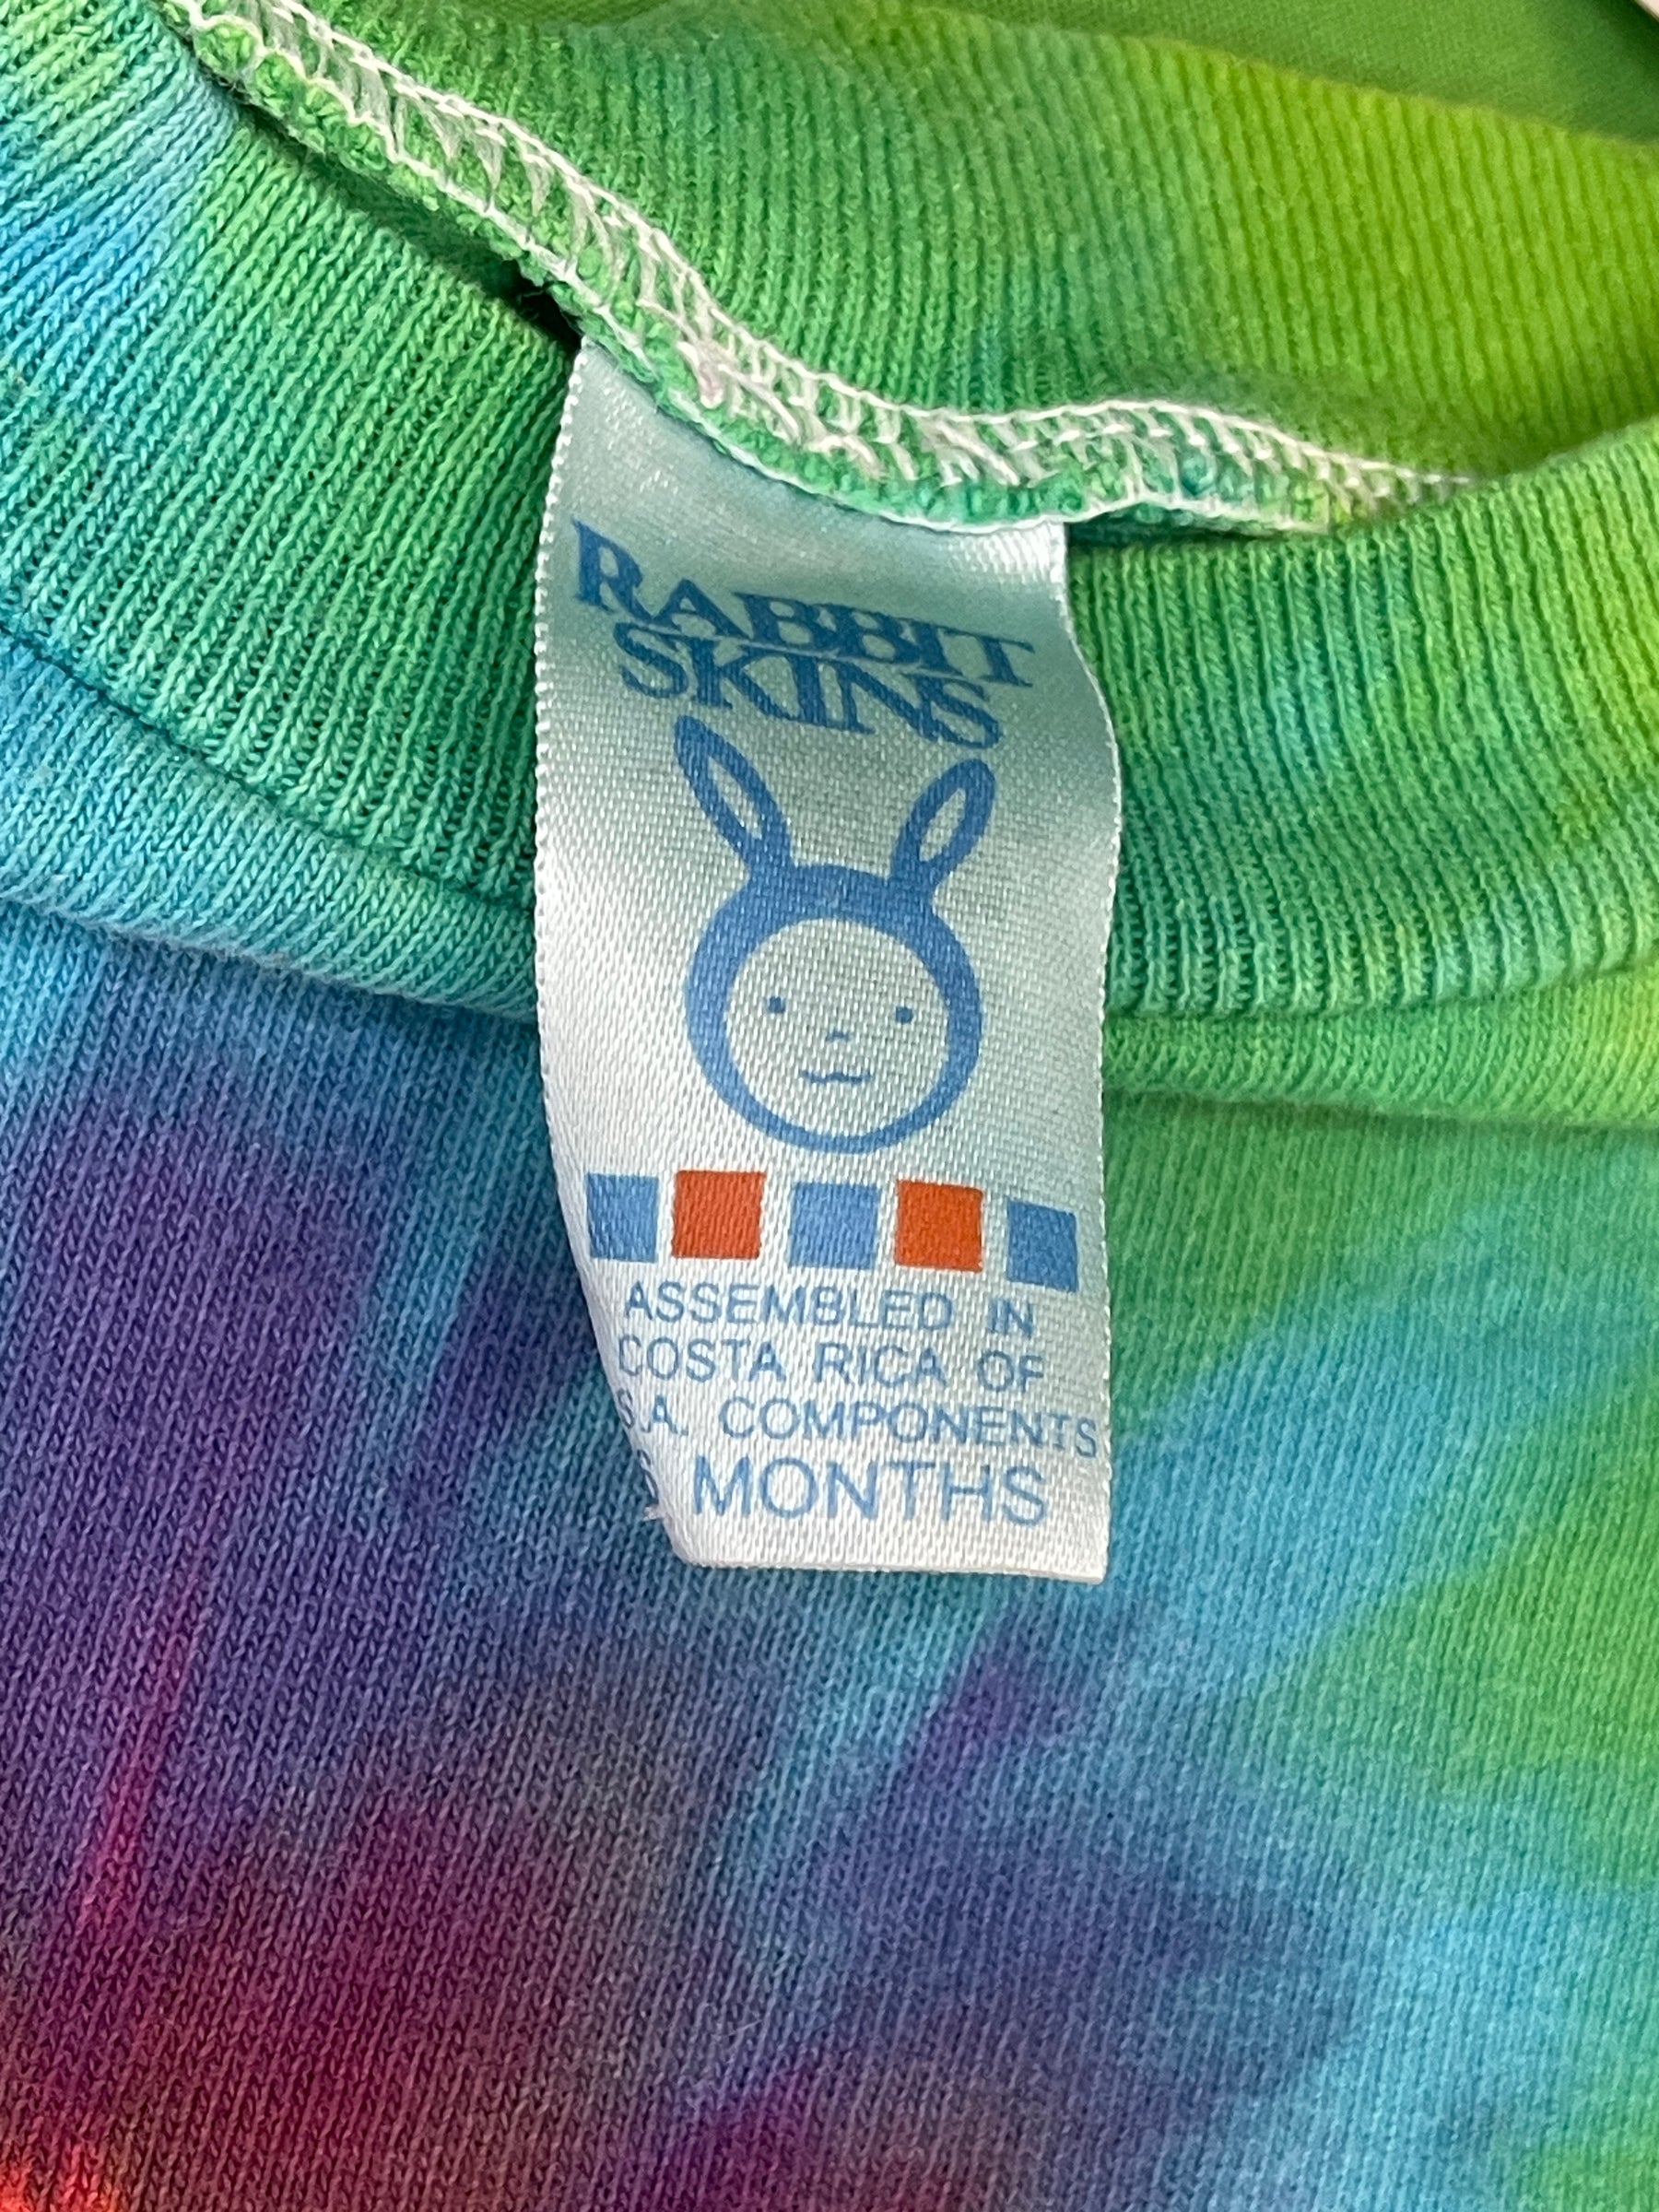 Rainbow Tie-Dye 100% Cotton Playsuit Baby Infant 6 Months